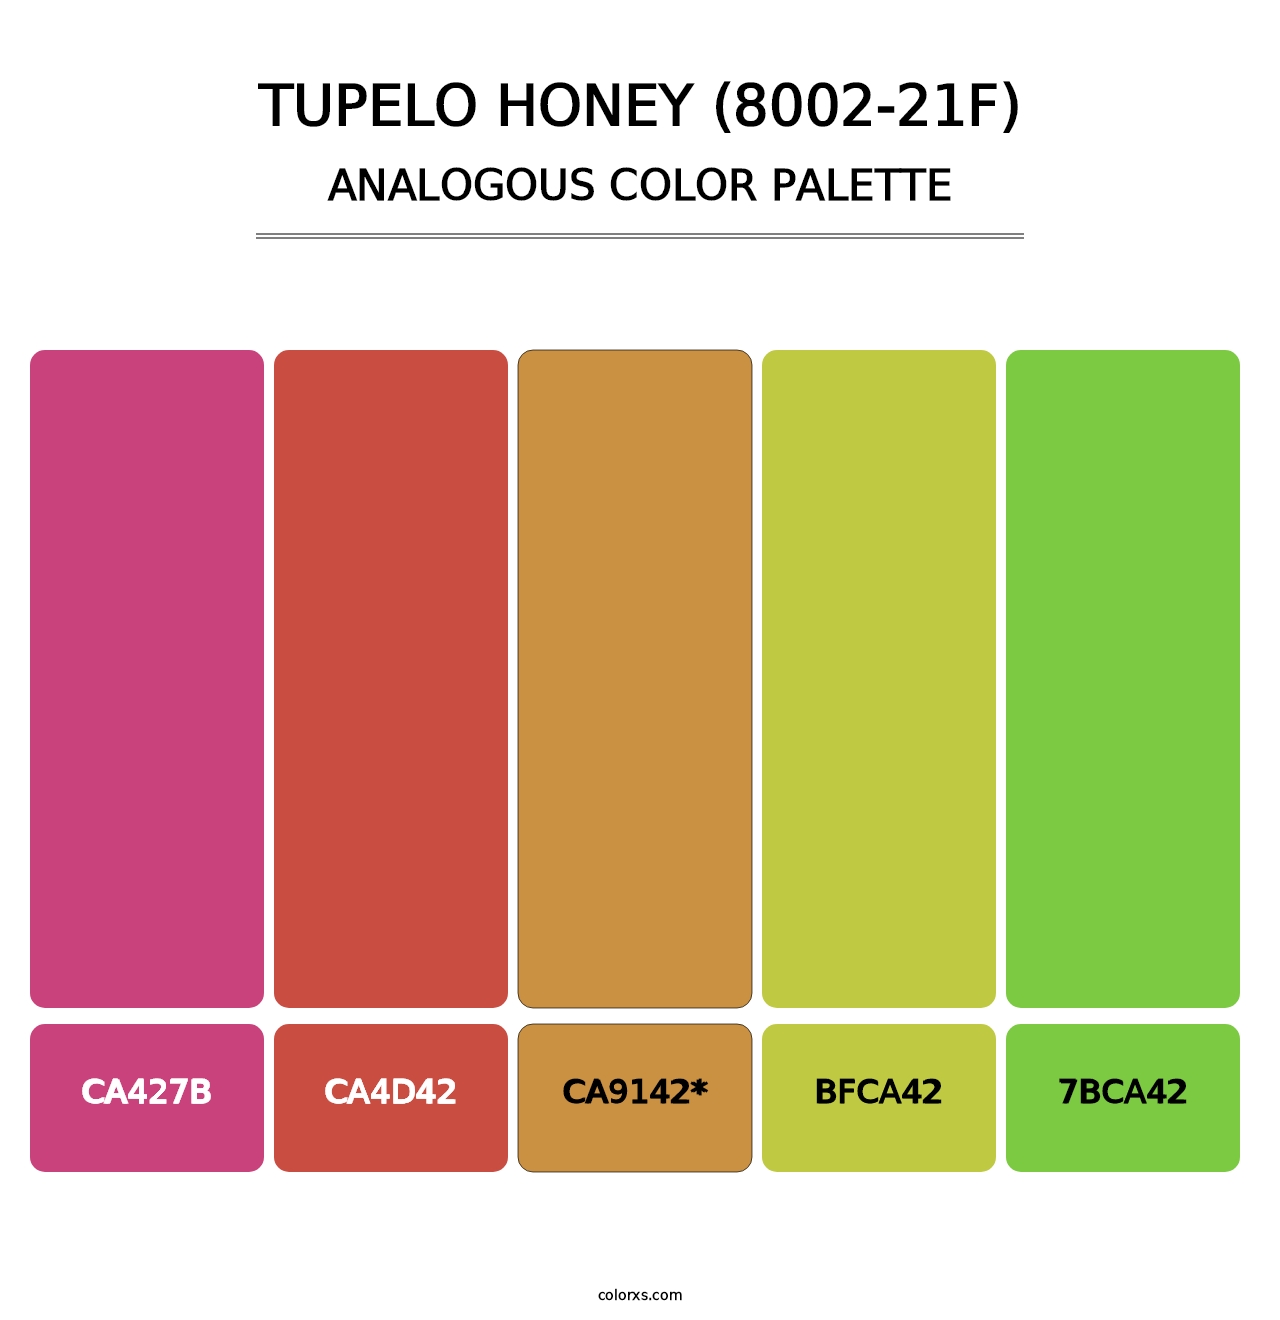 Tupelo Honey (8002-21F) - Analogous Color Palette